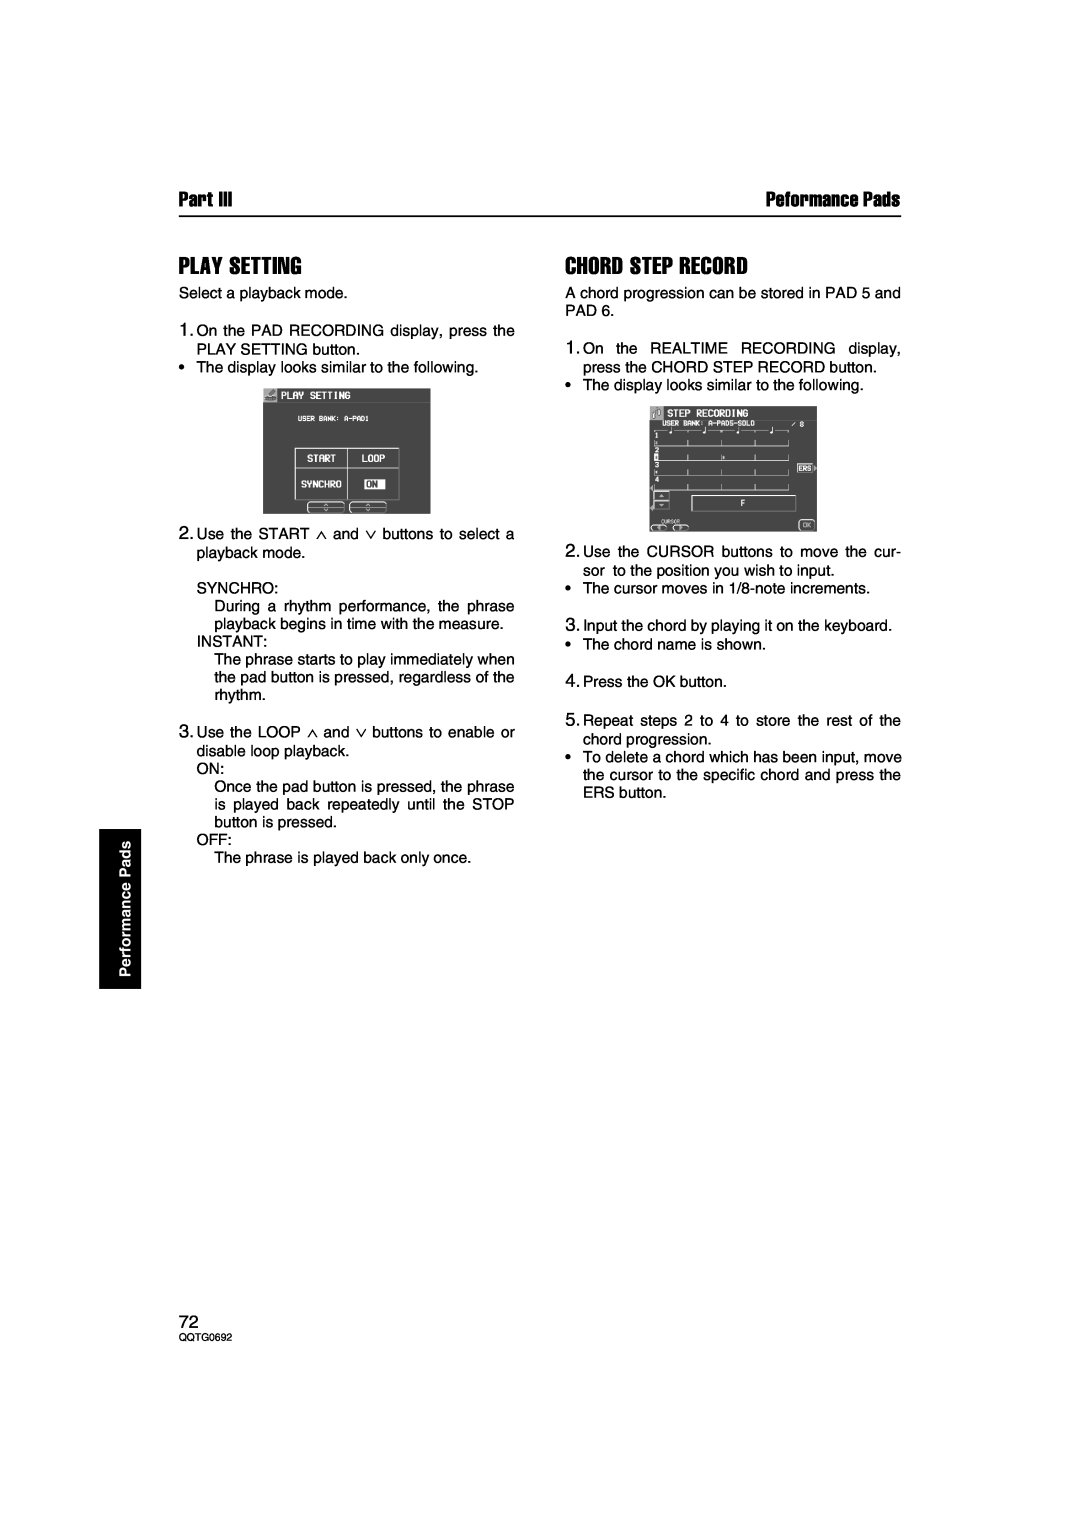 Panasonic SX-KN2600, SX-KN2400 manual Play Setting, Chord Step Record, Part, Peformance Pads, Performance Pads 